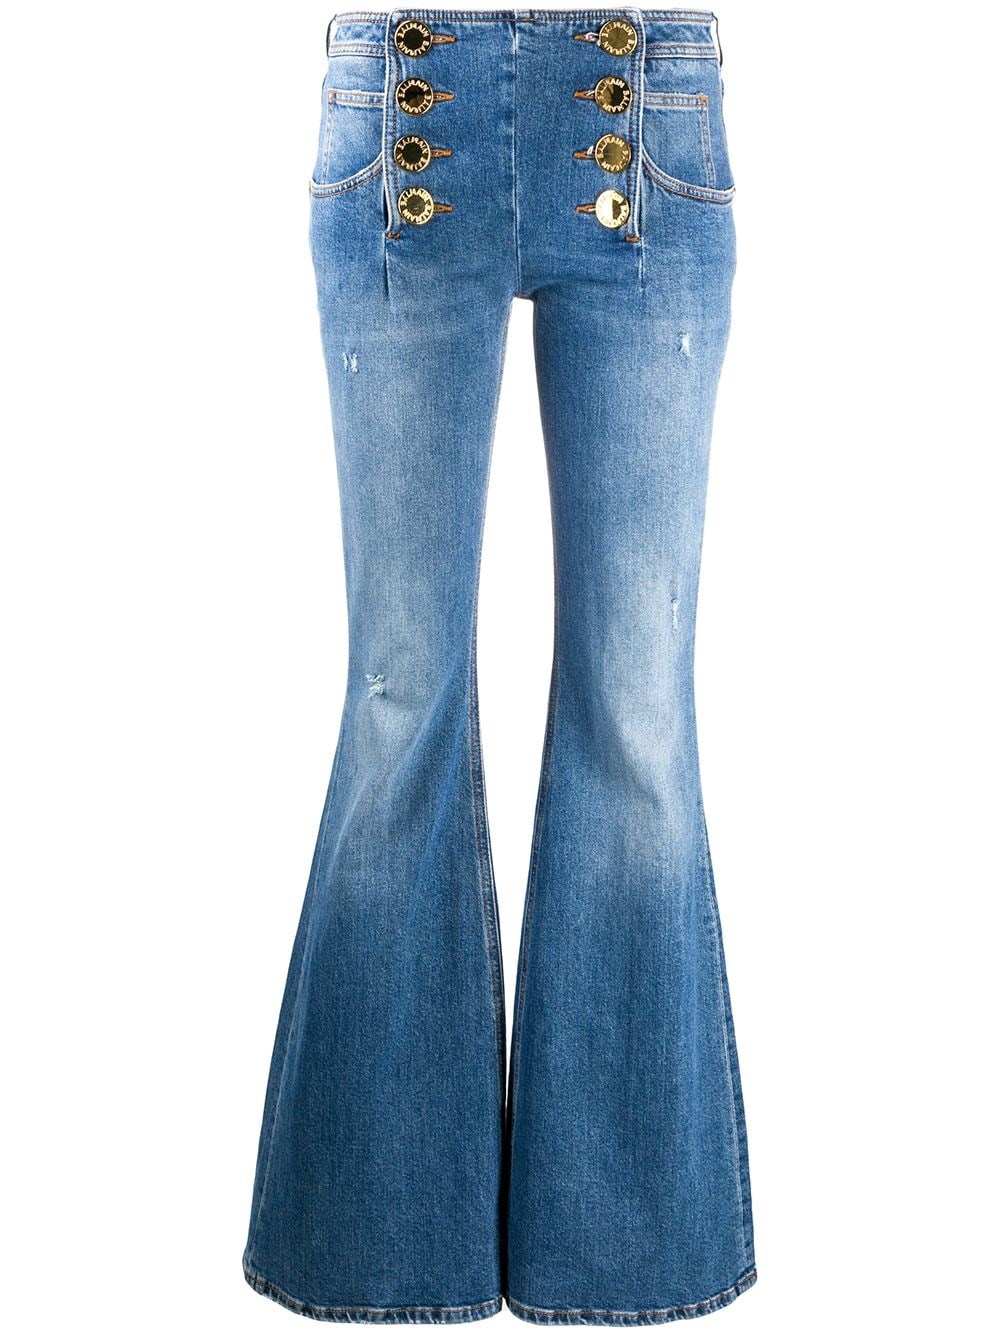 balmain style jeans